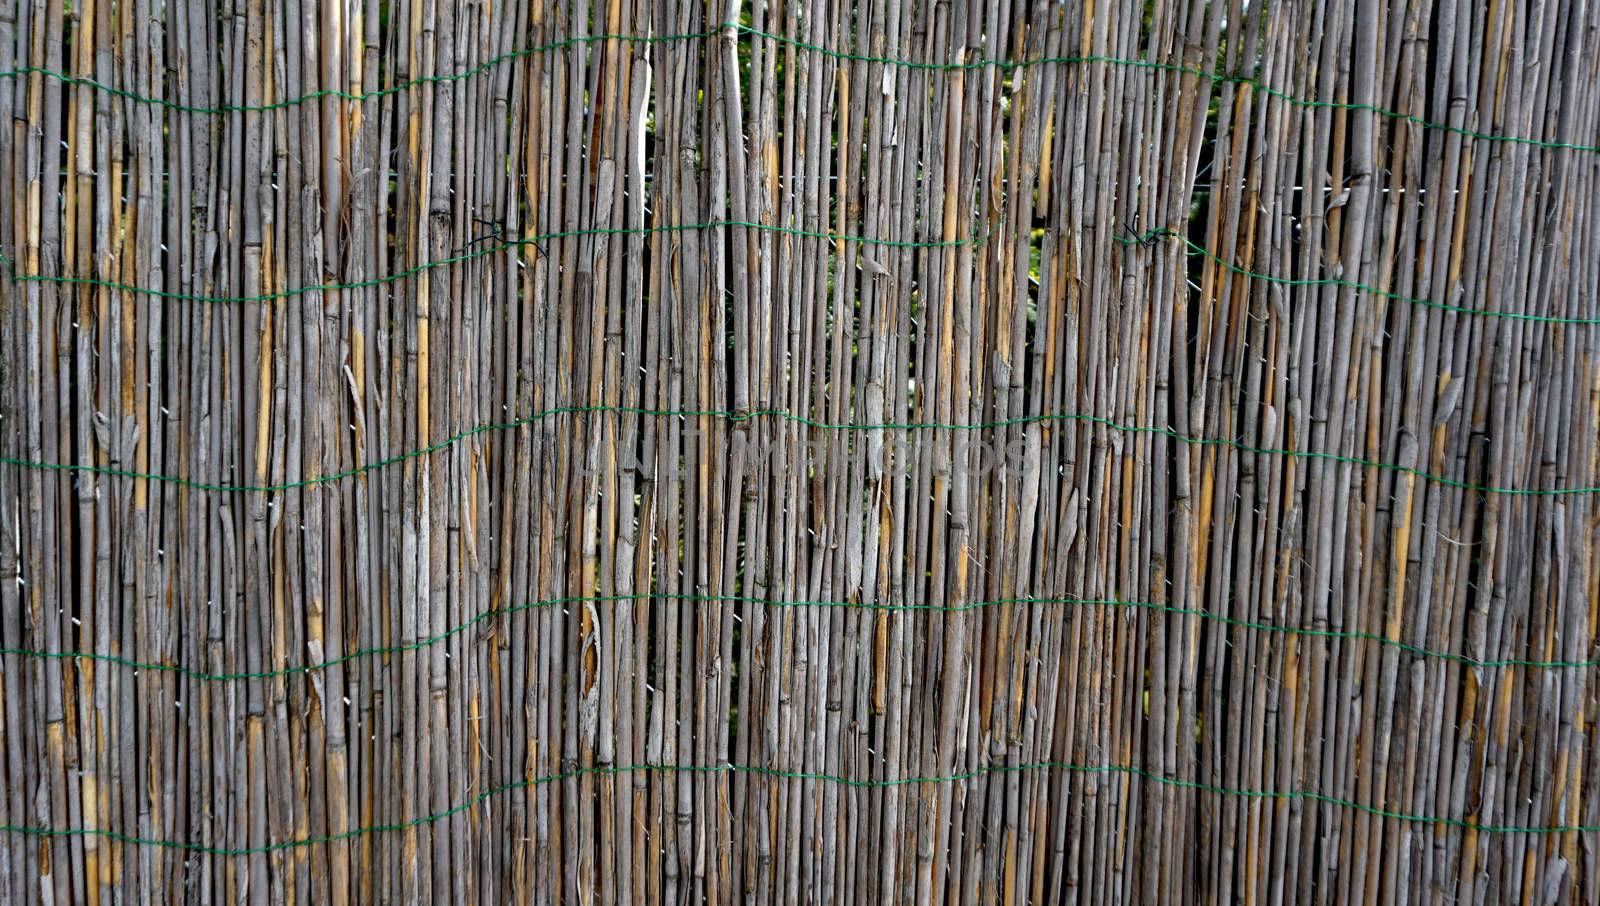 Bamboo wall fence horizontal